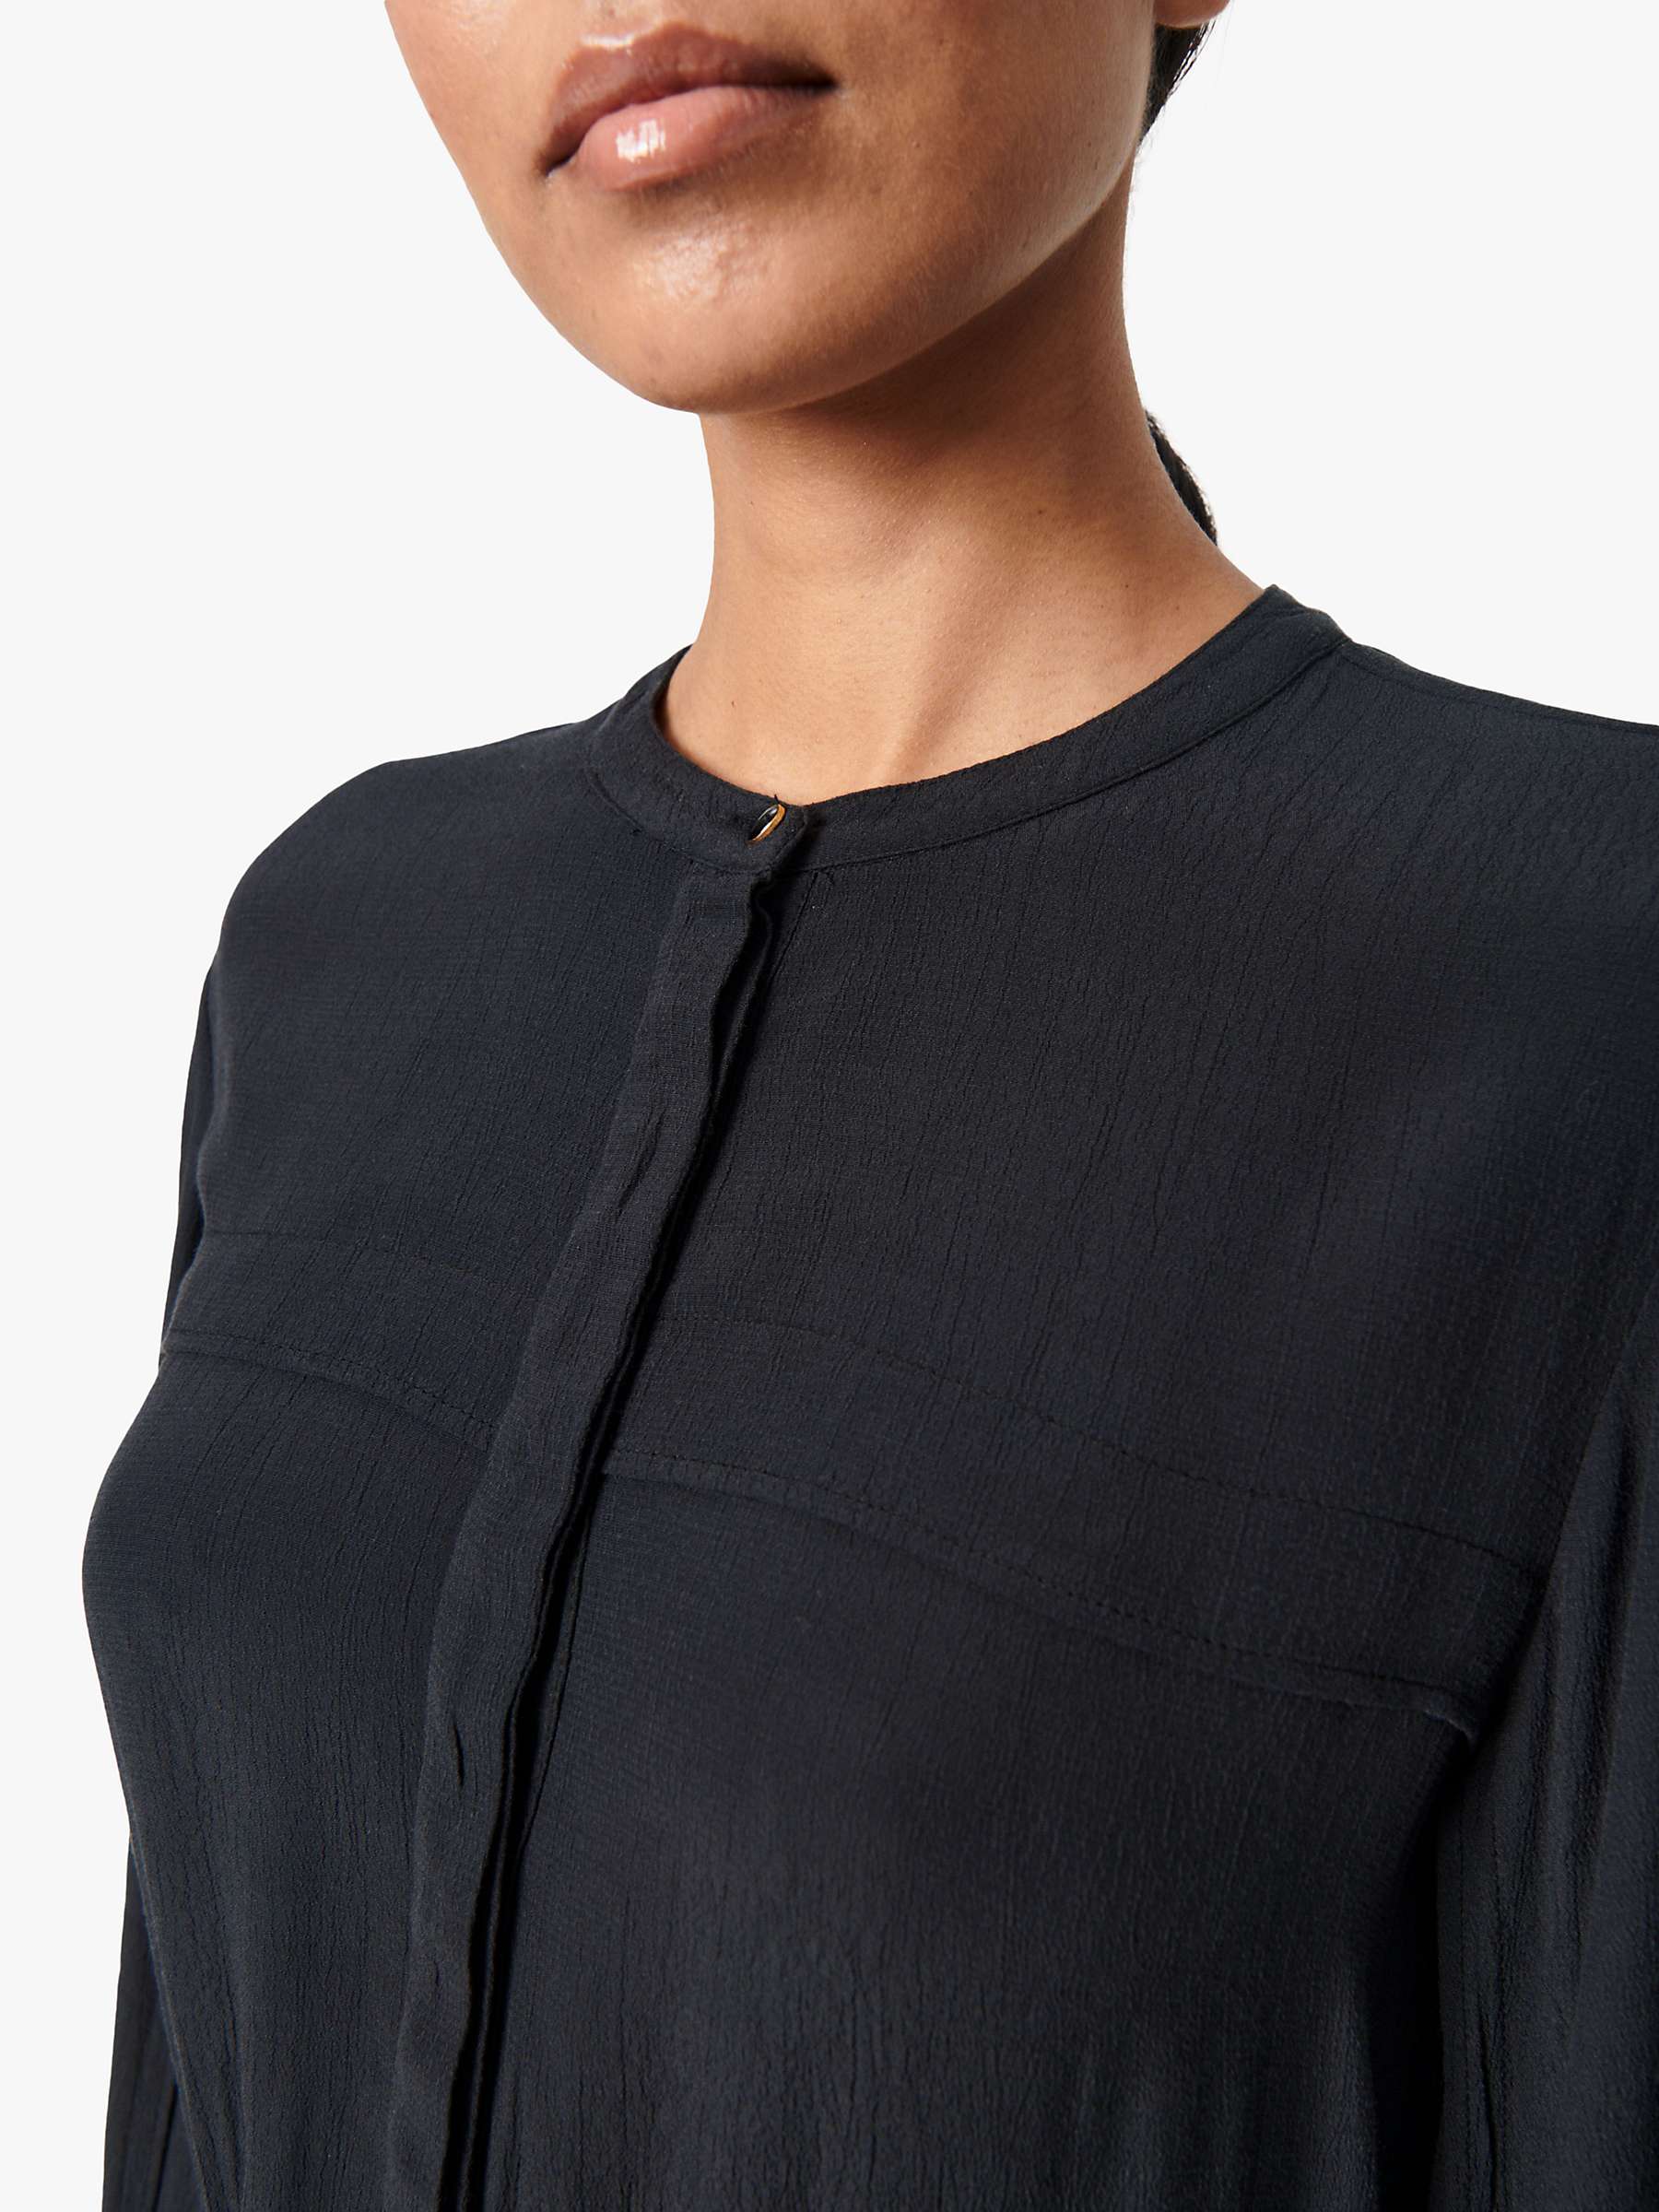 Buy Soaked In Luxury Layna Midi Shirt Dress, Black Online at johnlewis.com